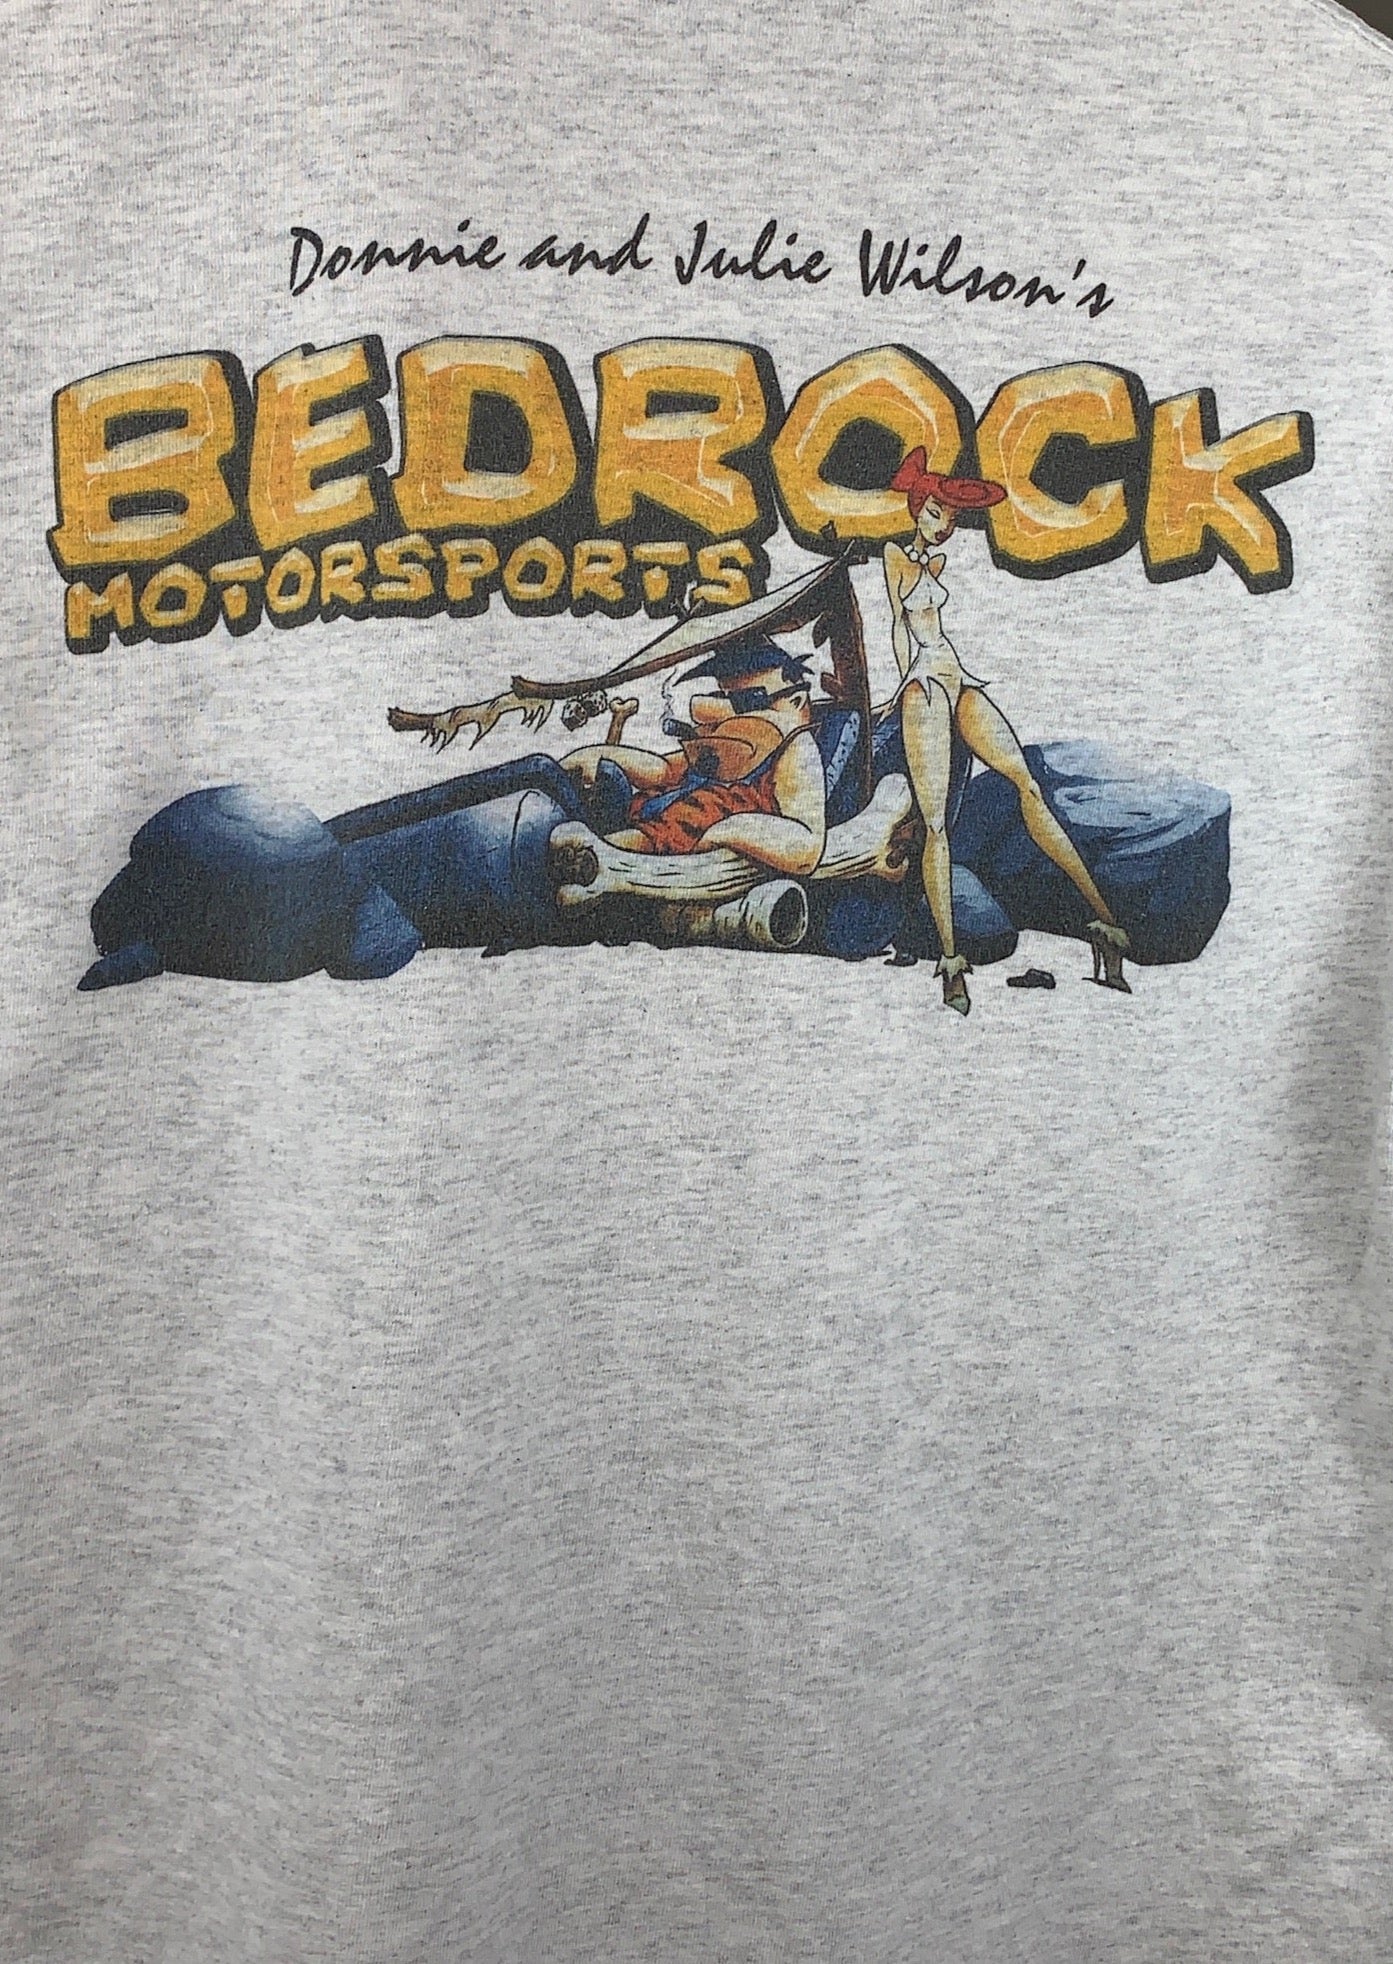 Stone Age Rides By Bedrock Motorsports